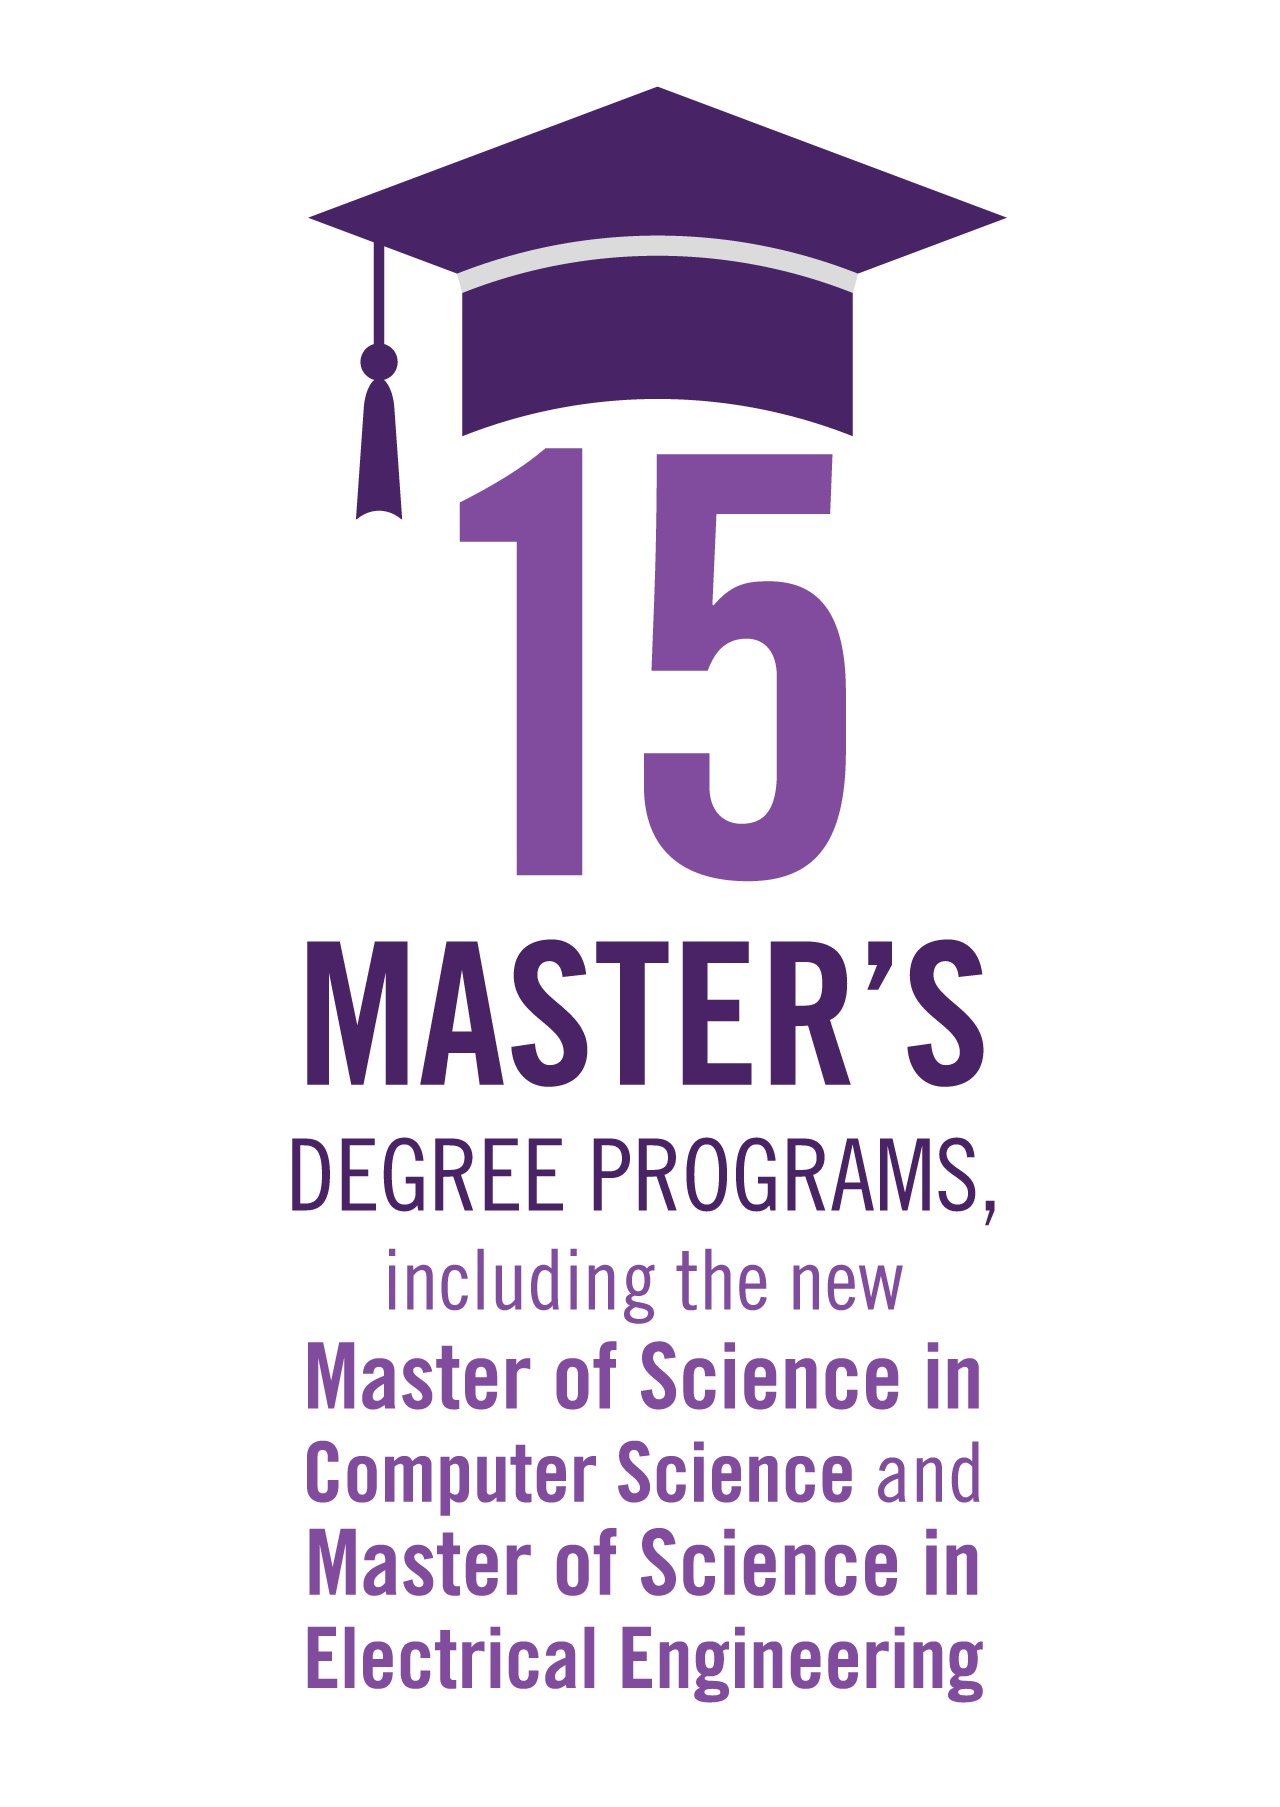 image text: 15 master's degree programs